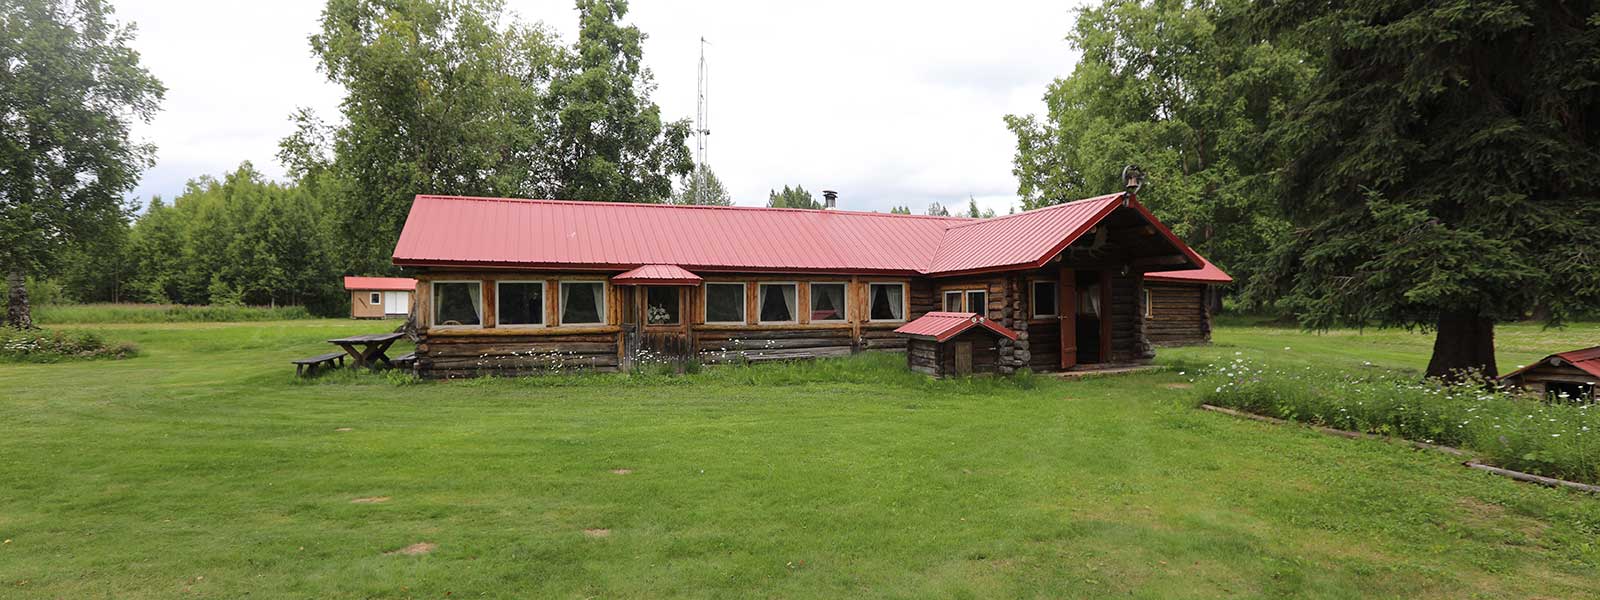 Haus Kaufen In Alaska Dmax